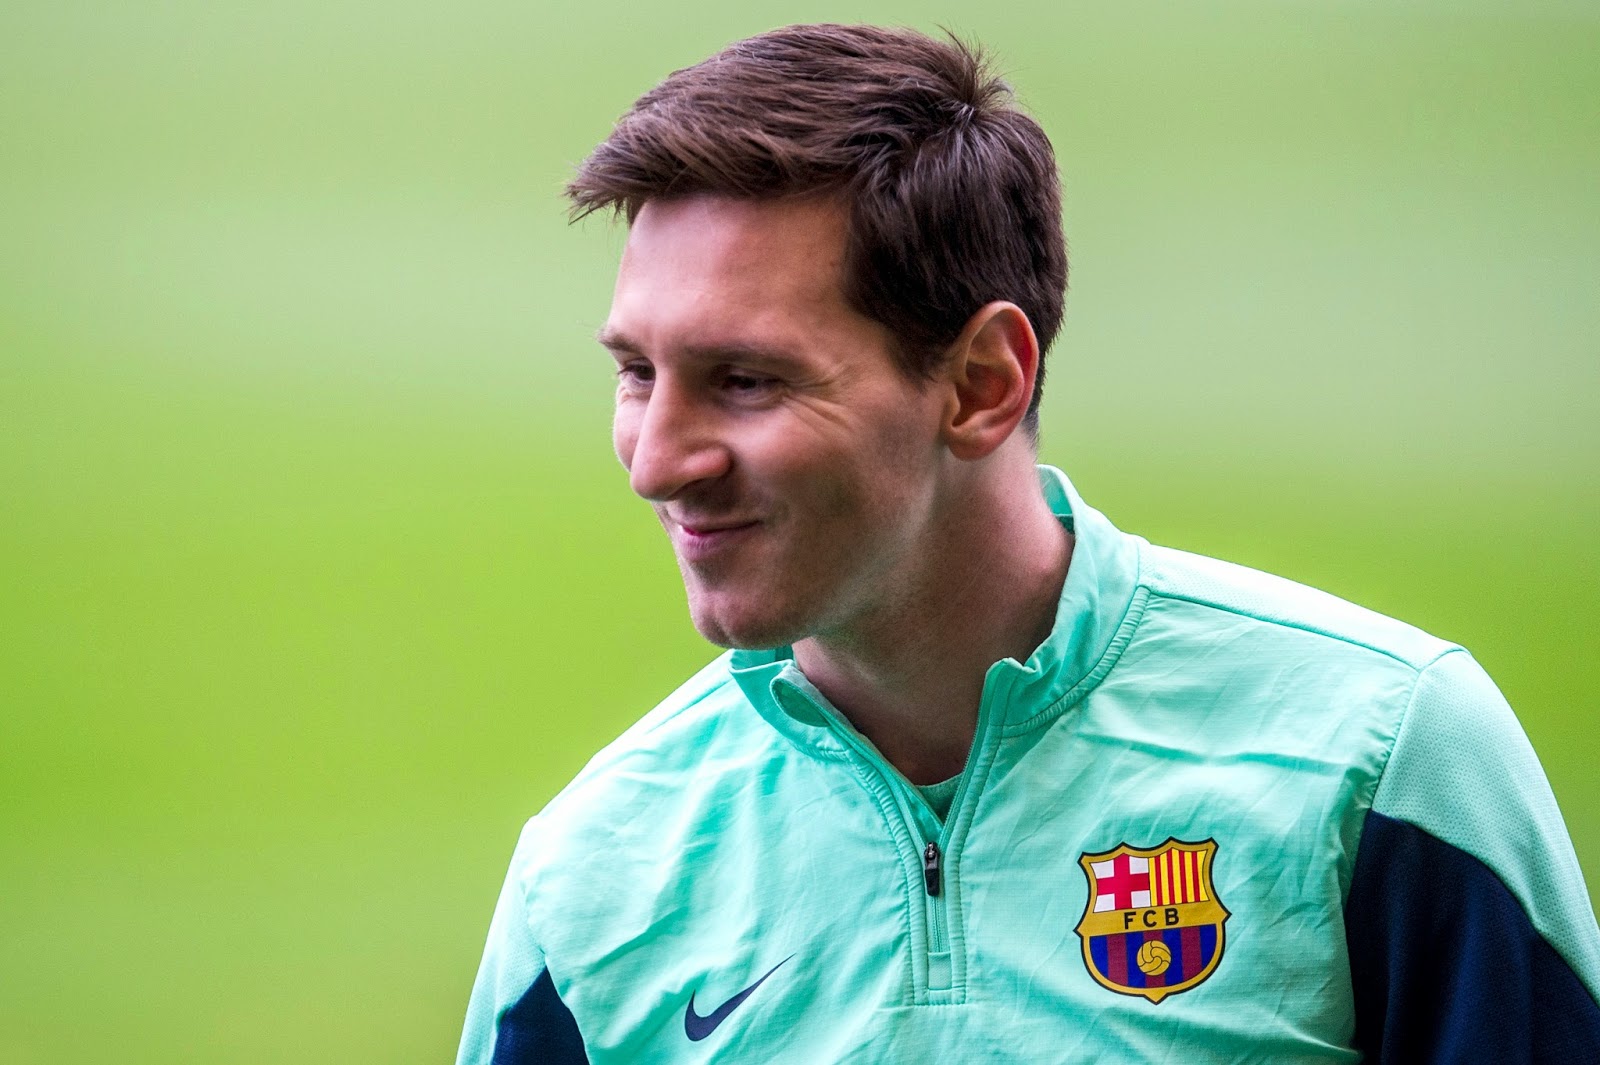 Lionel Messi Full HD Wallpaper Encarles